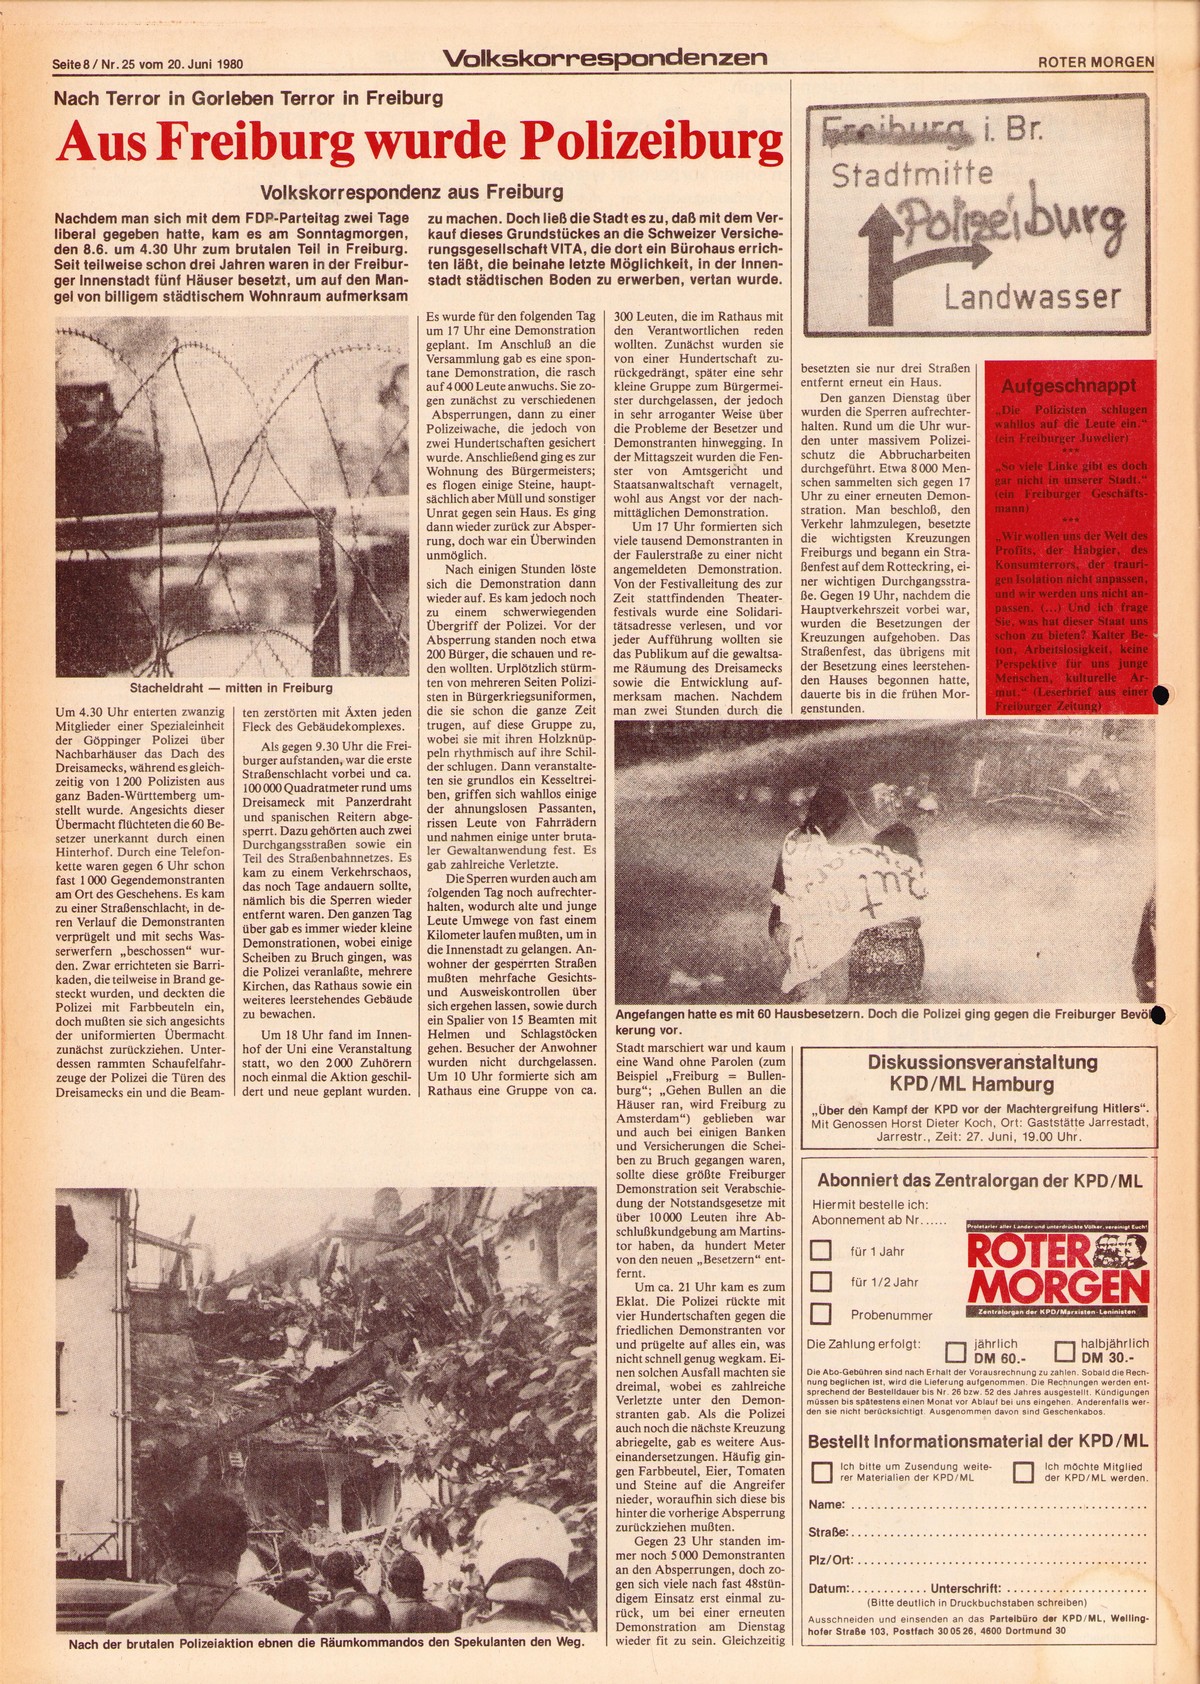 Roter Morgen, 14. Jg., 20. Juni 1980, Nr. 25, Seite 8